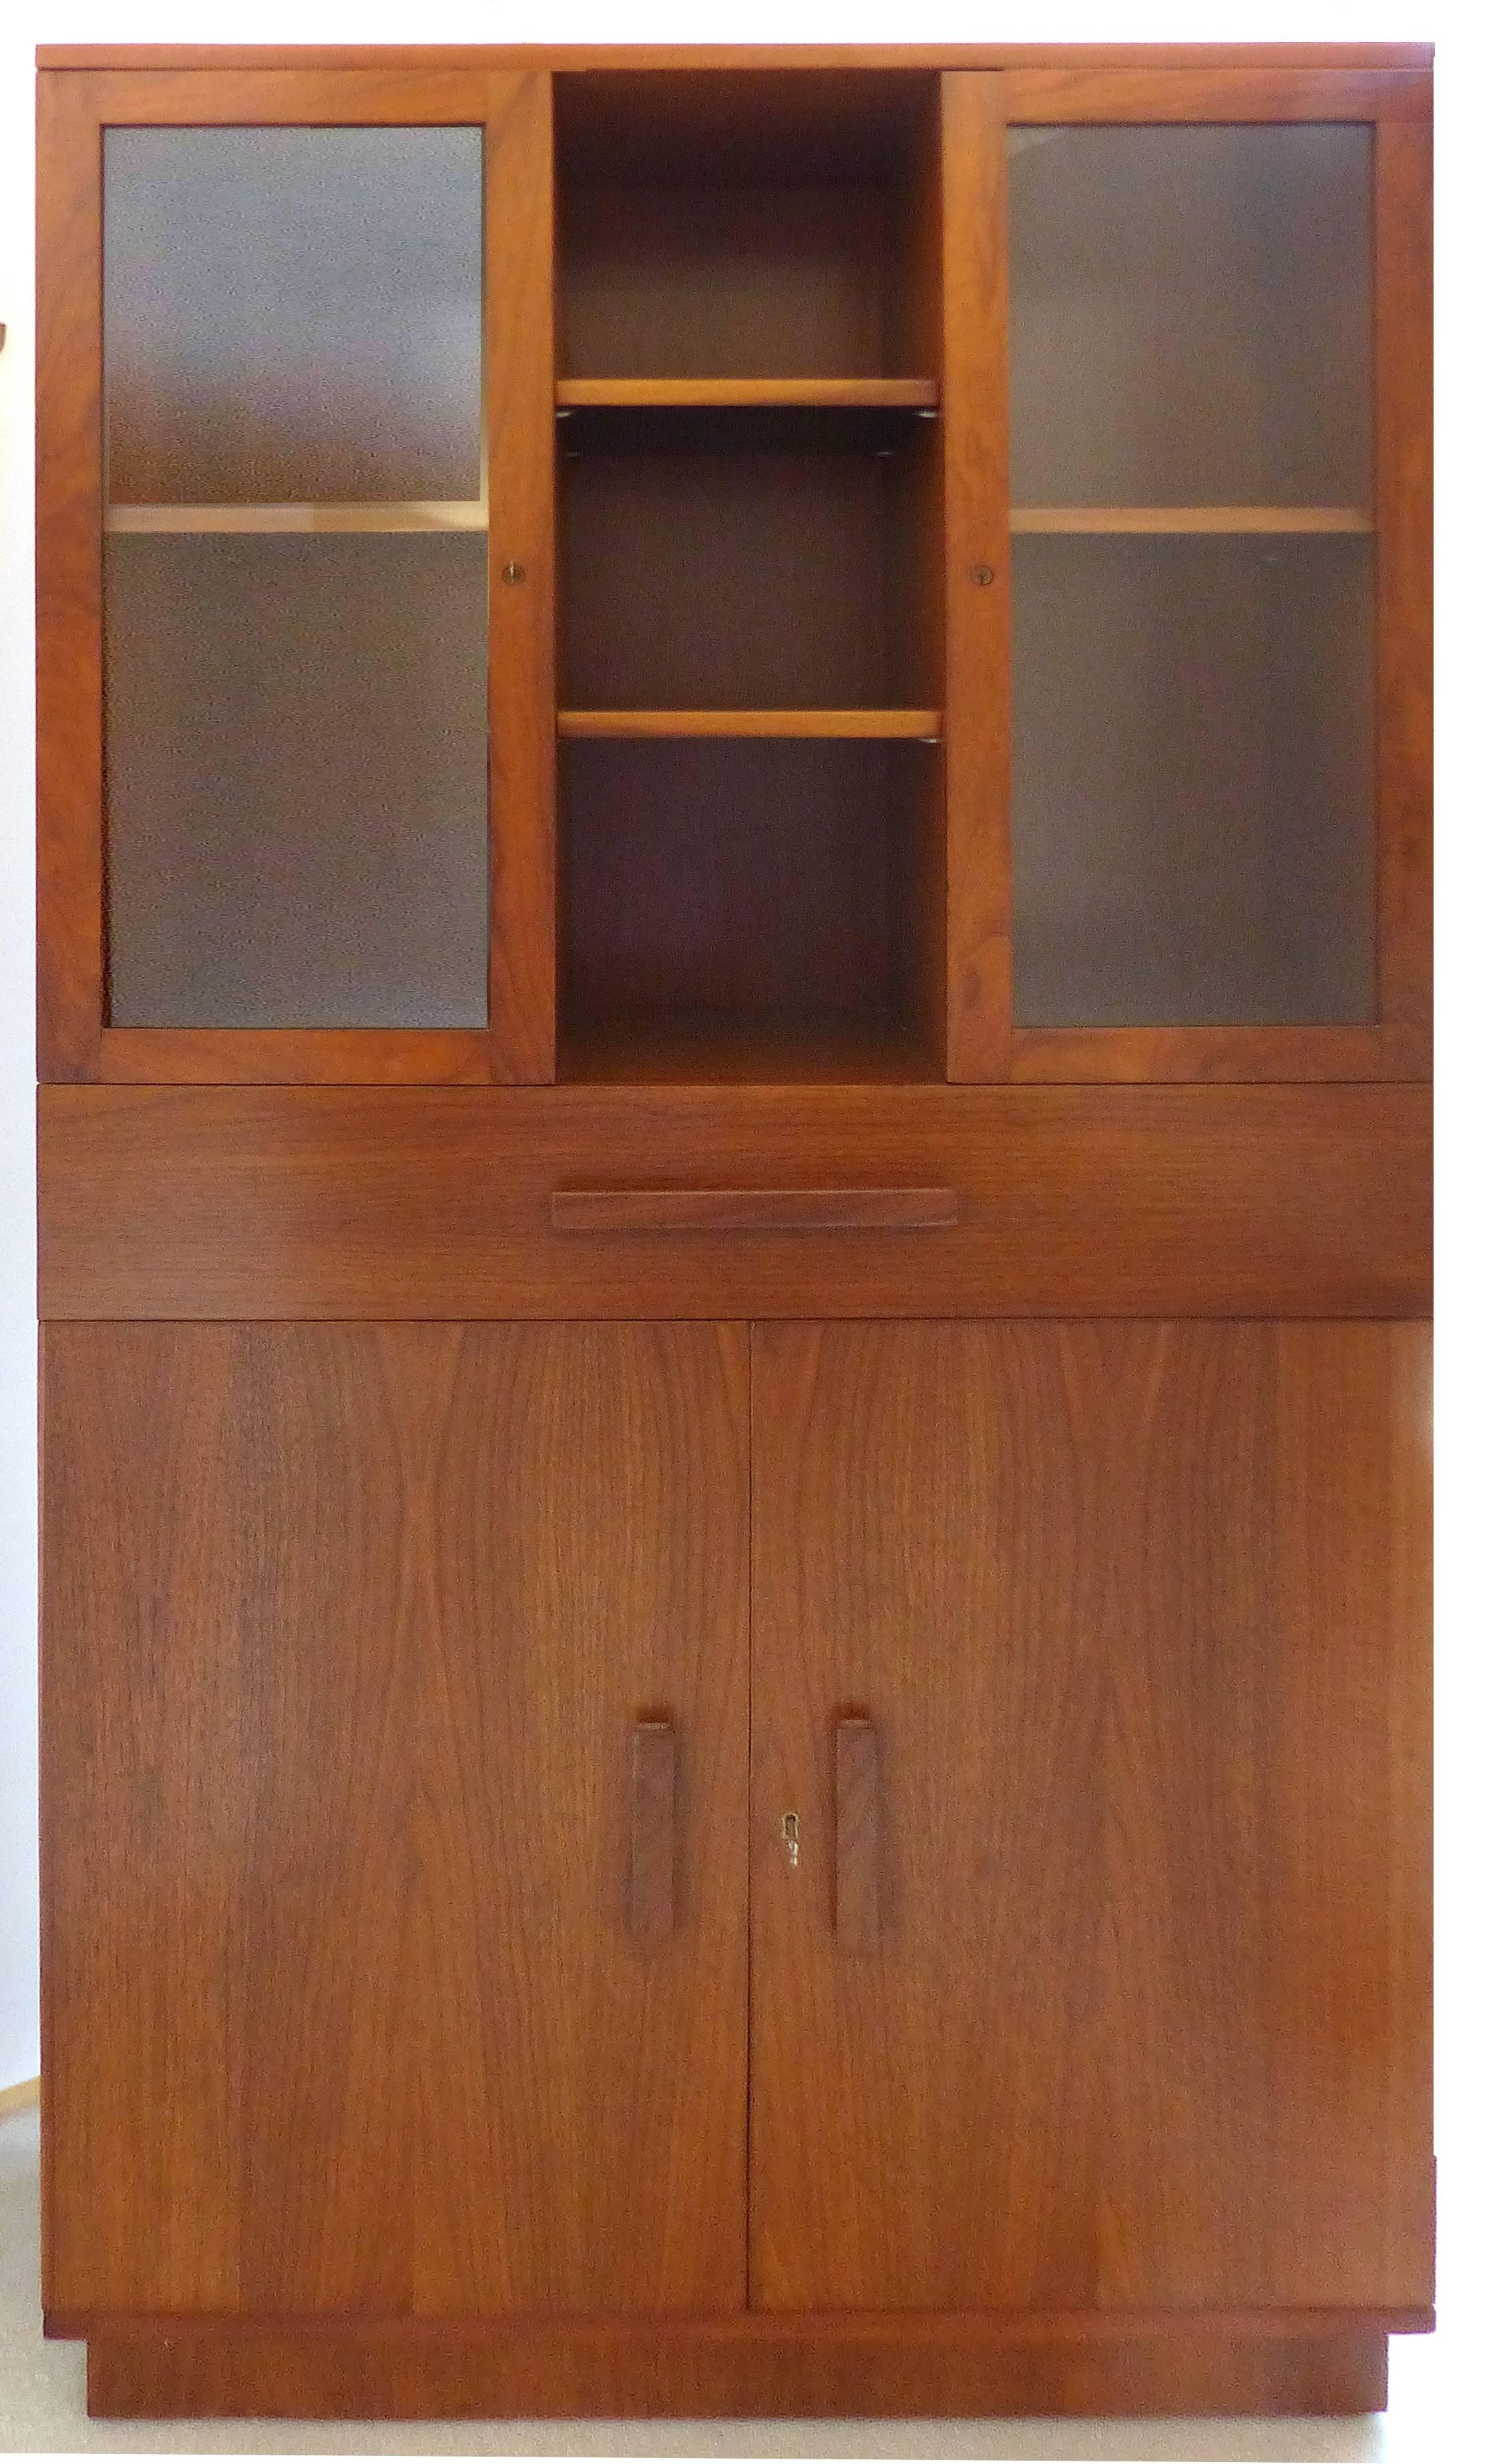 Veneer 1930s American Deco Bookcase Vitrine by Modernage Furniture